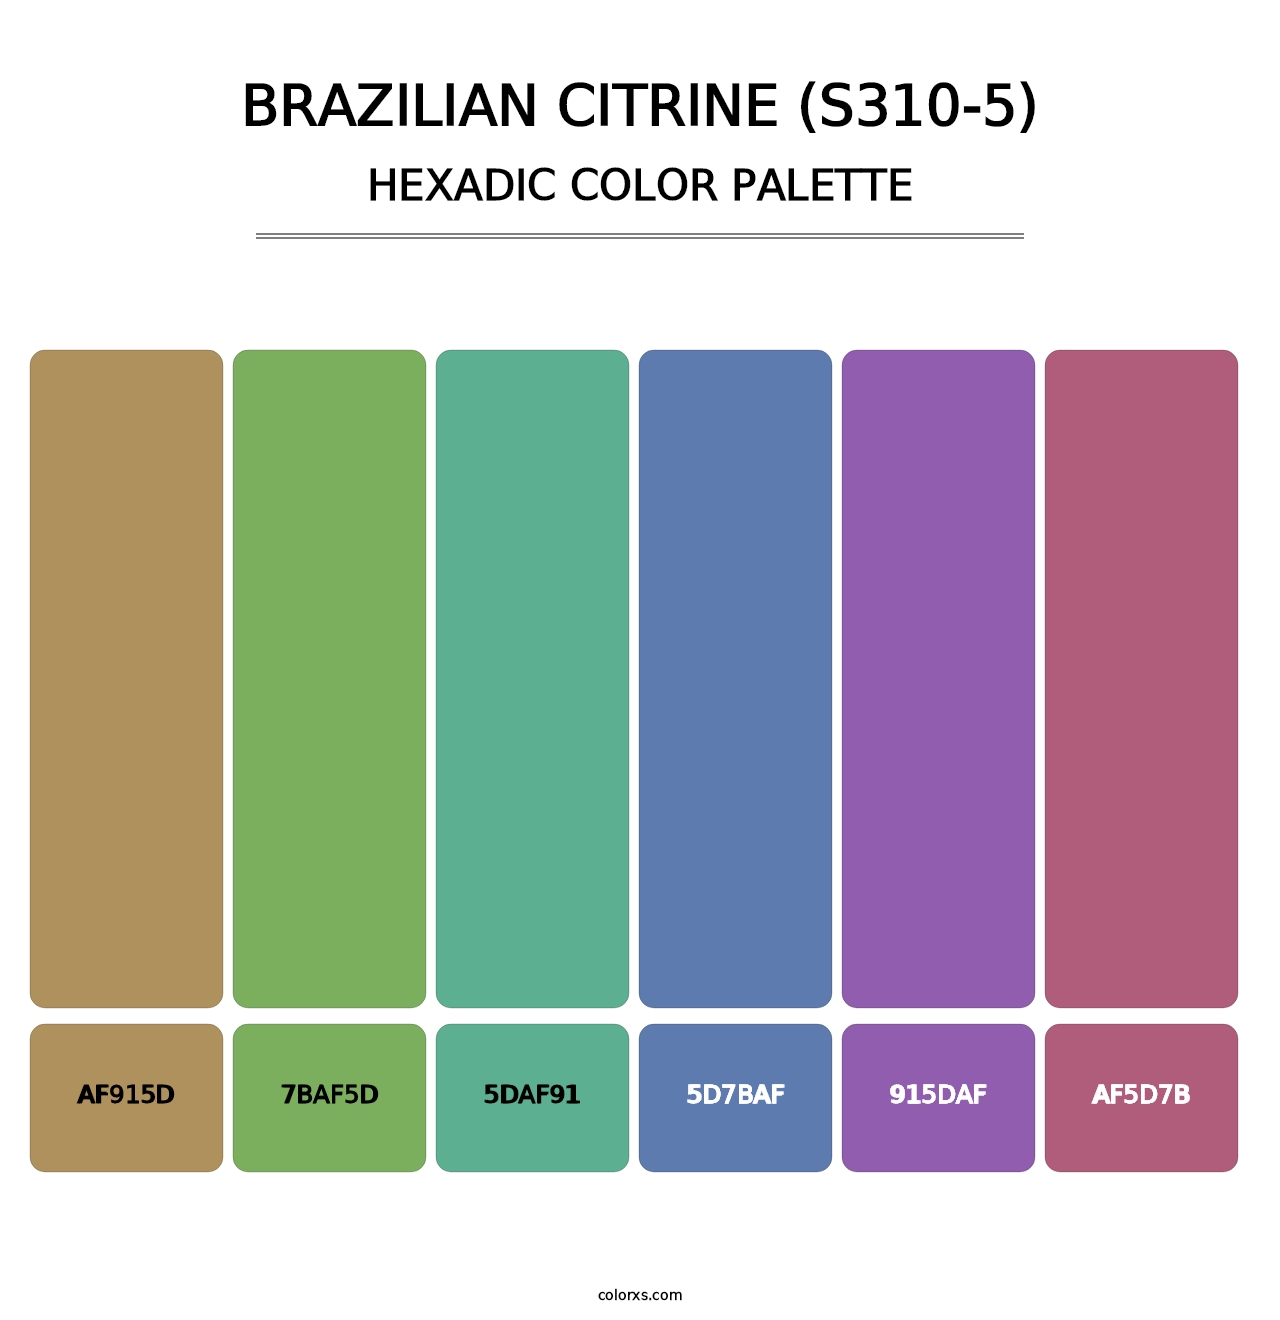 Brazilian Citrine (S310-5) - Hexadic Color Palette